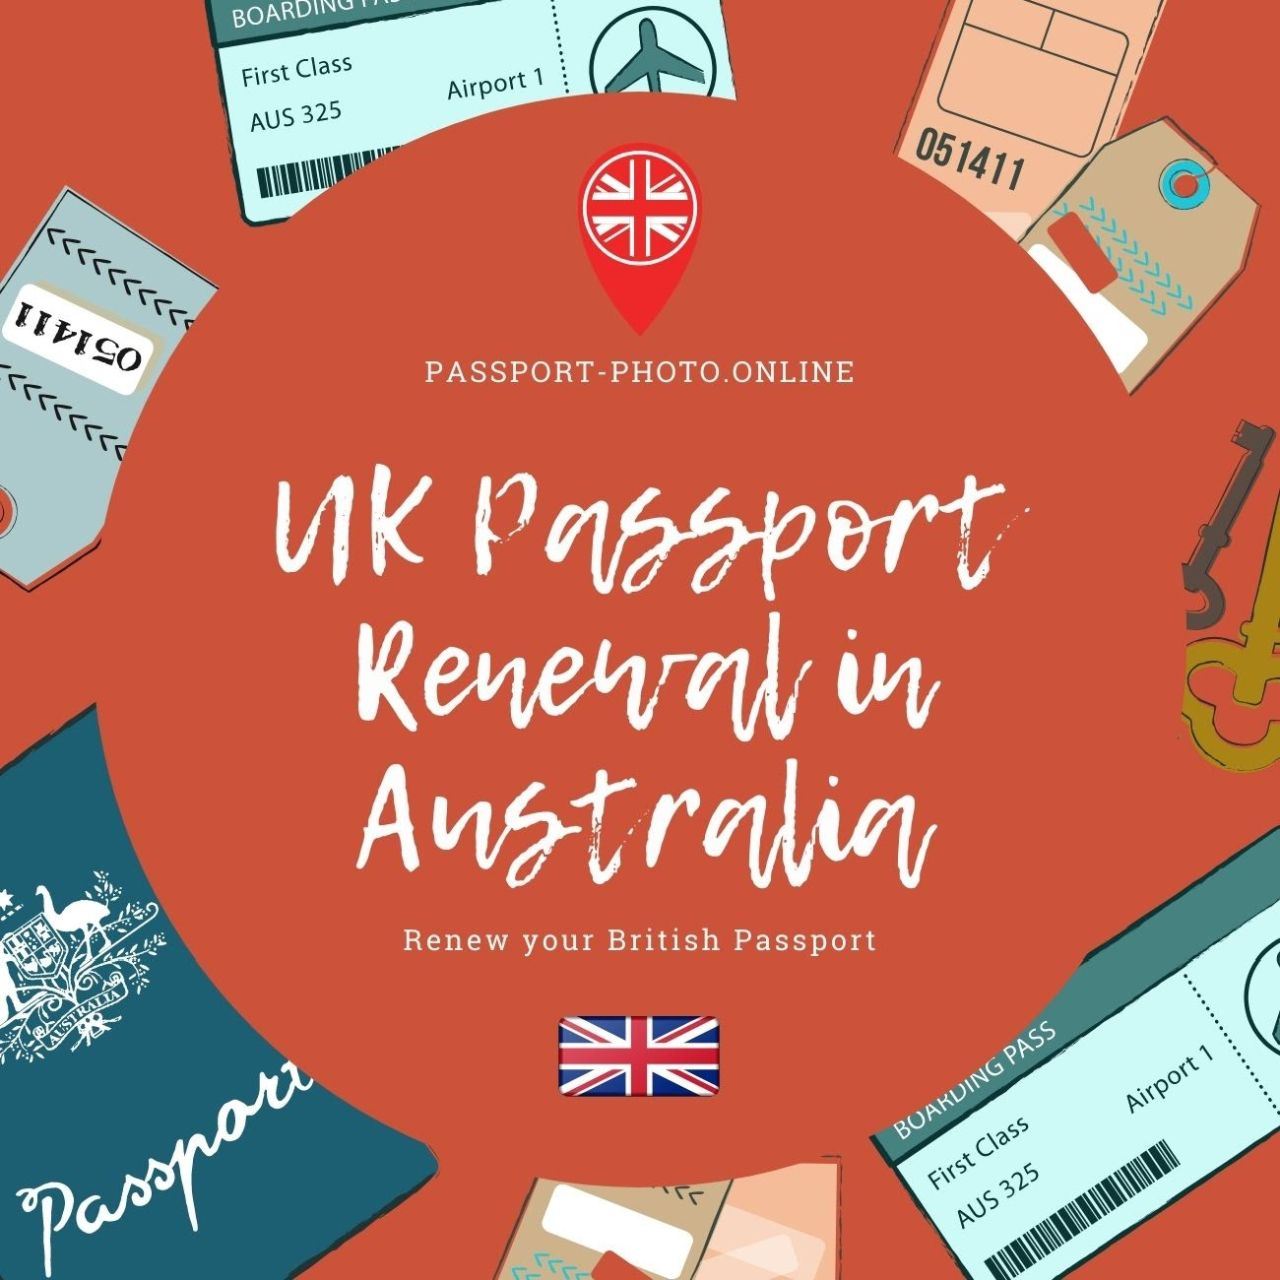 How to renew your UK passport in Australia?